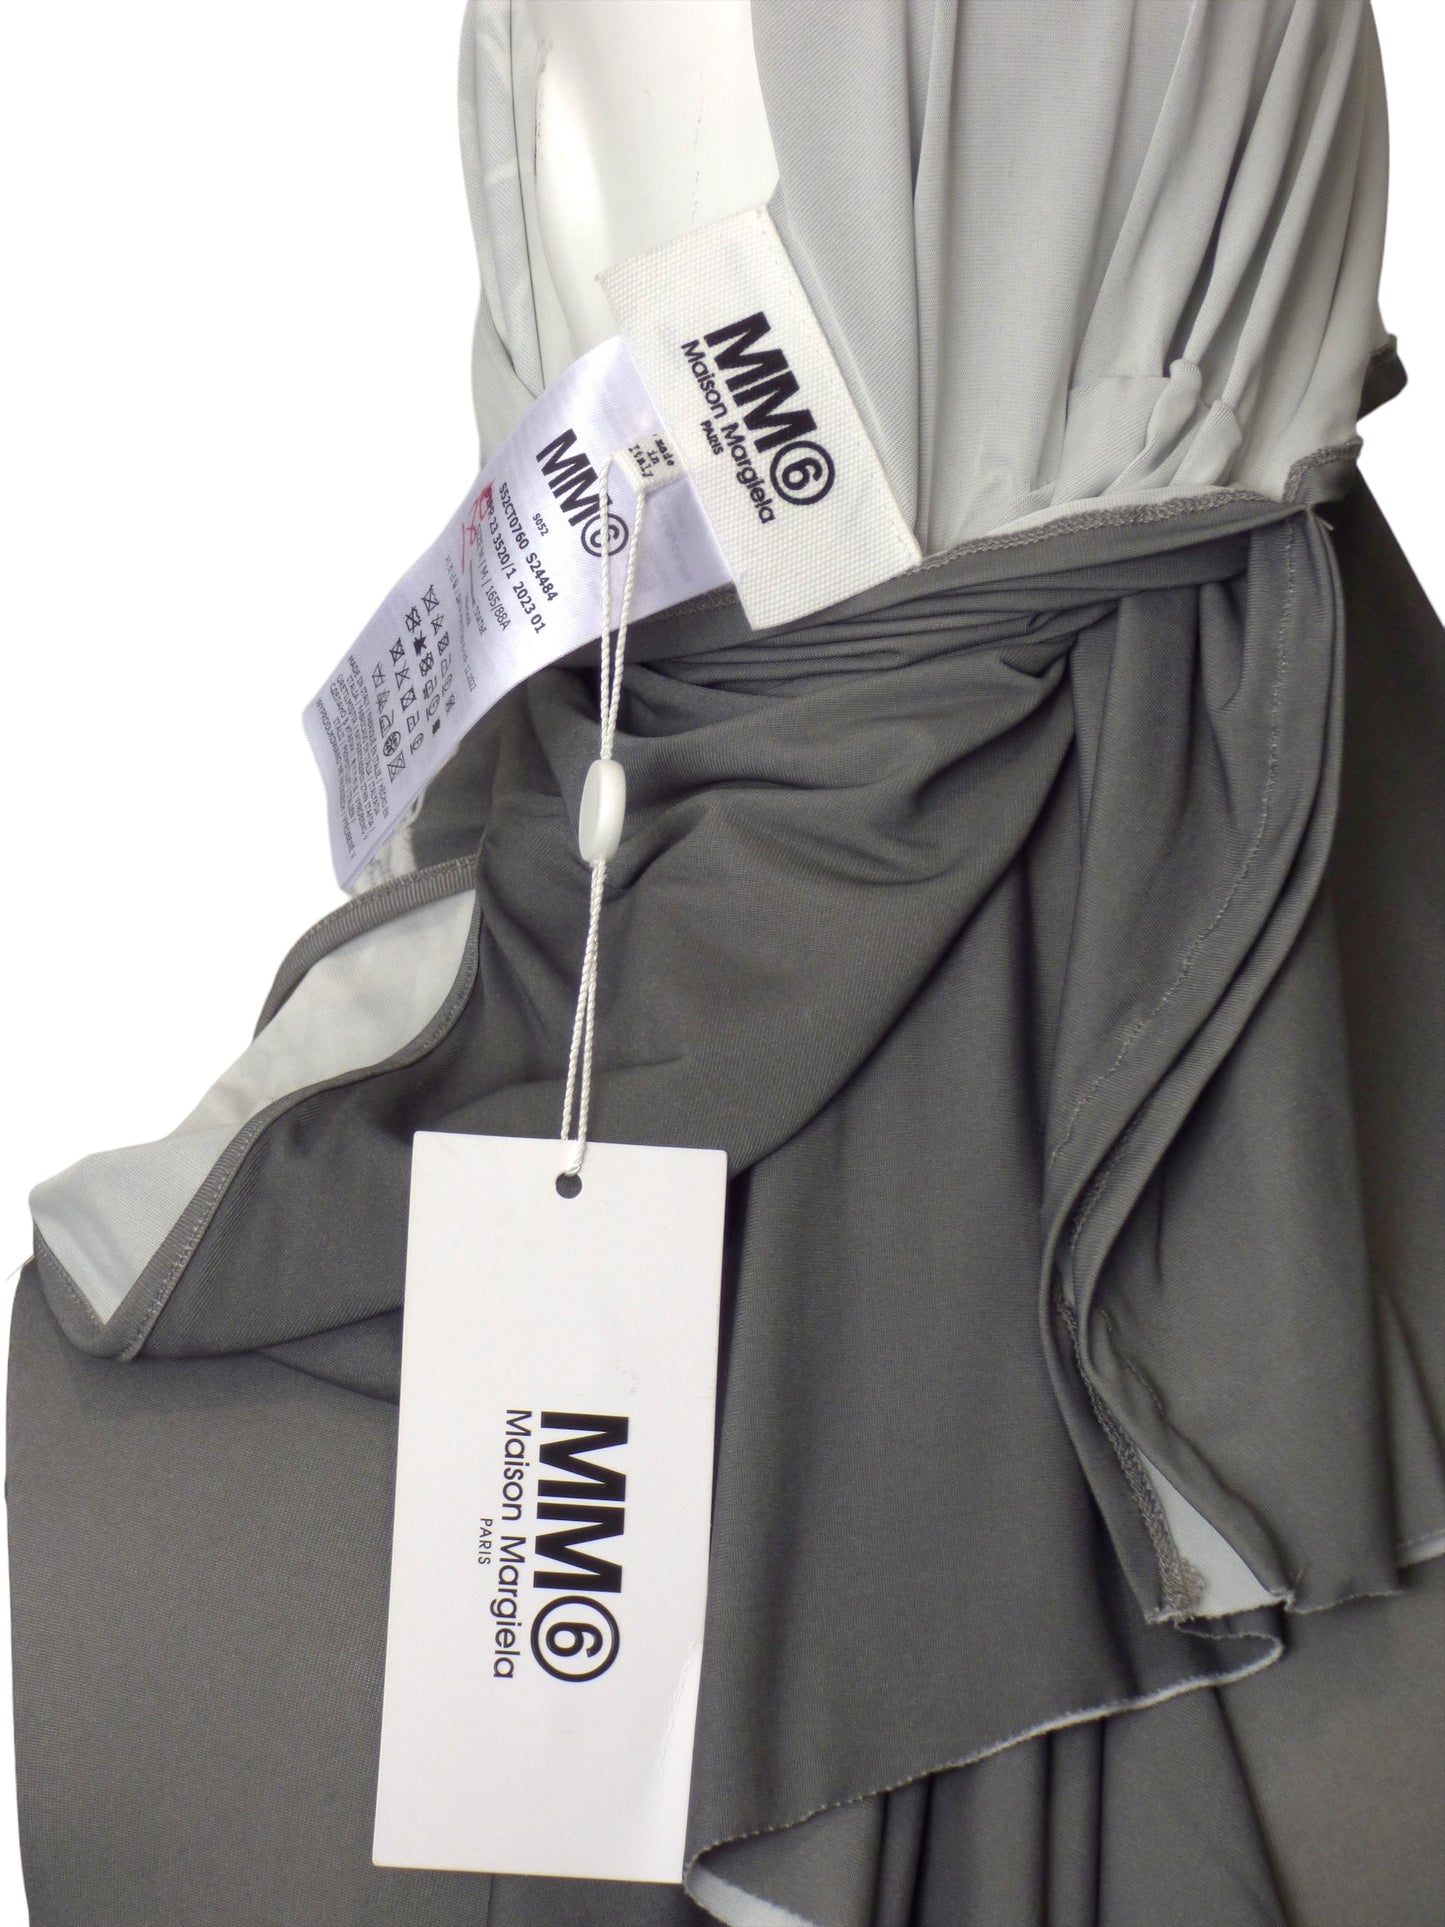 MM6 MARGIELA- NWT Graphic Print Knit Dress, Size 8